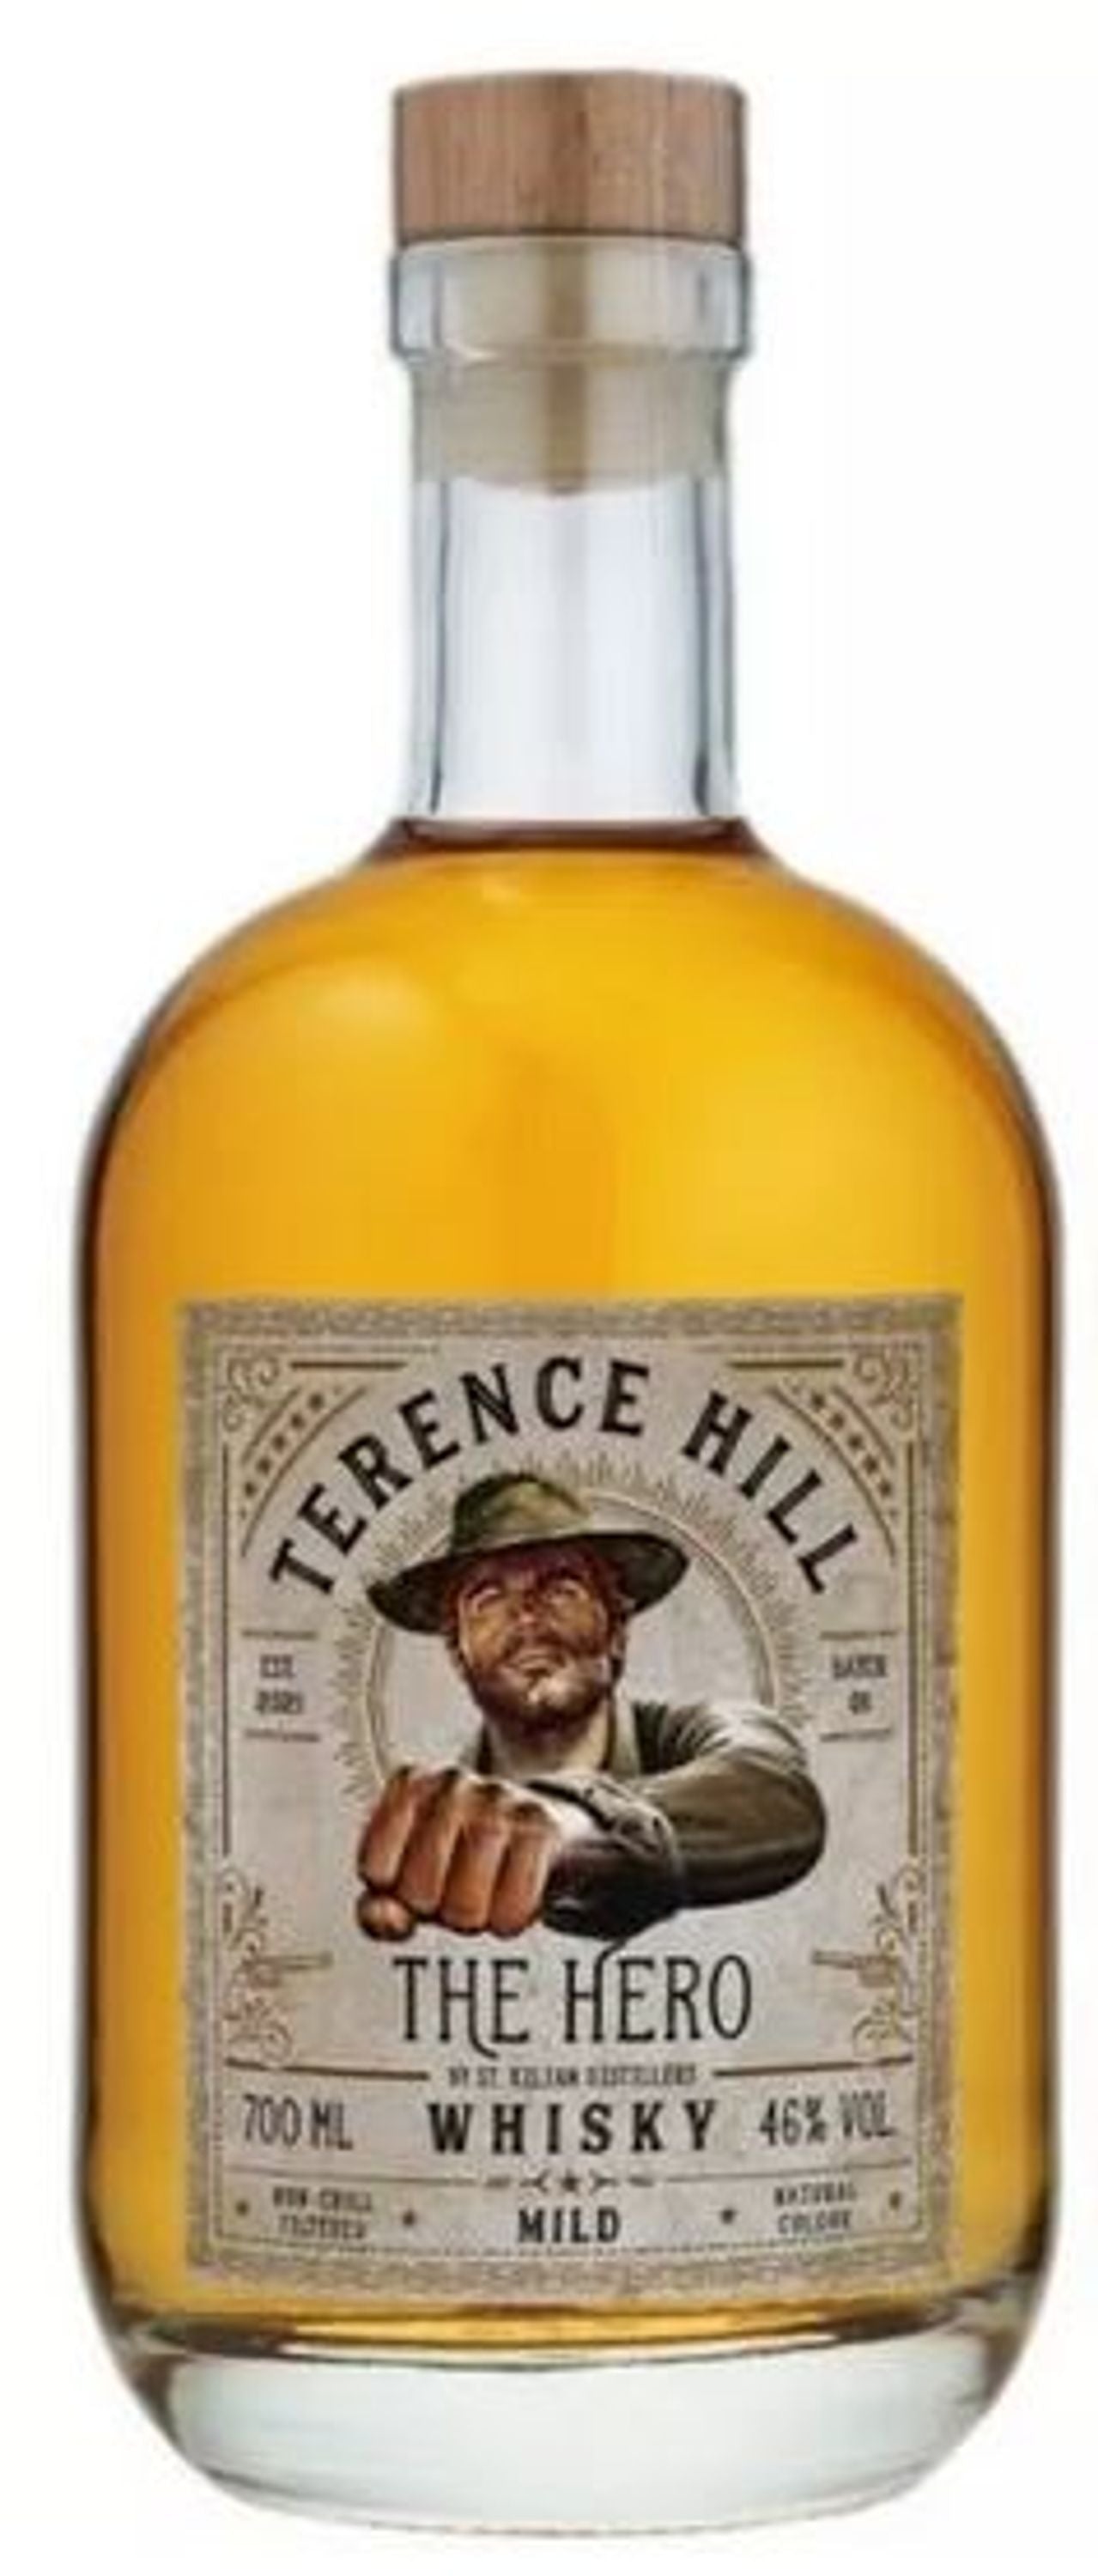 St. Kilian Terence Hill Whisky, 0,7l, alc. 46 Vol.-%